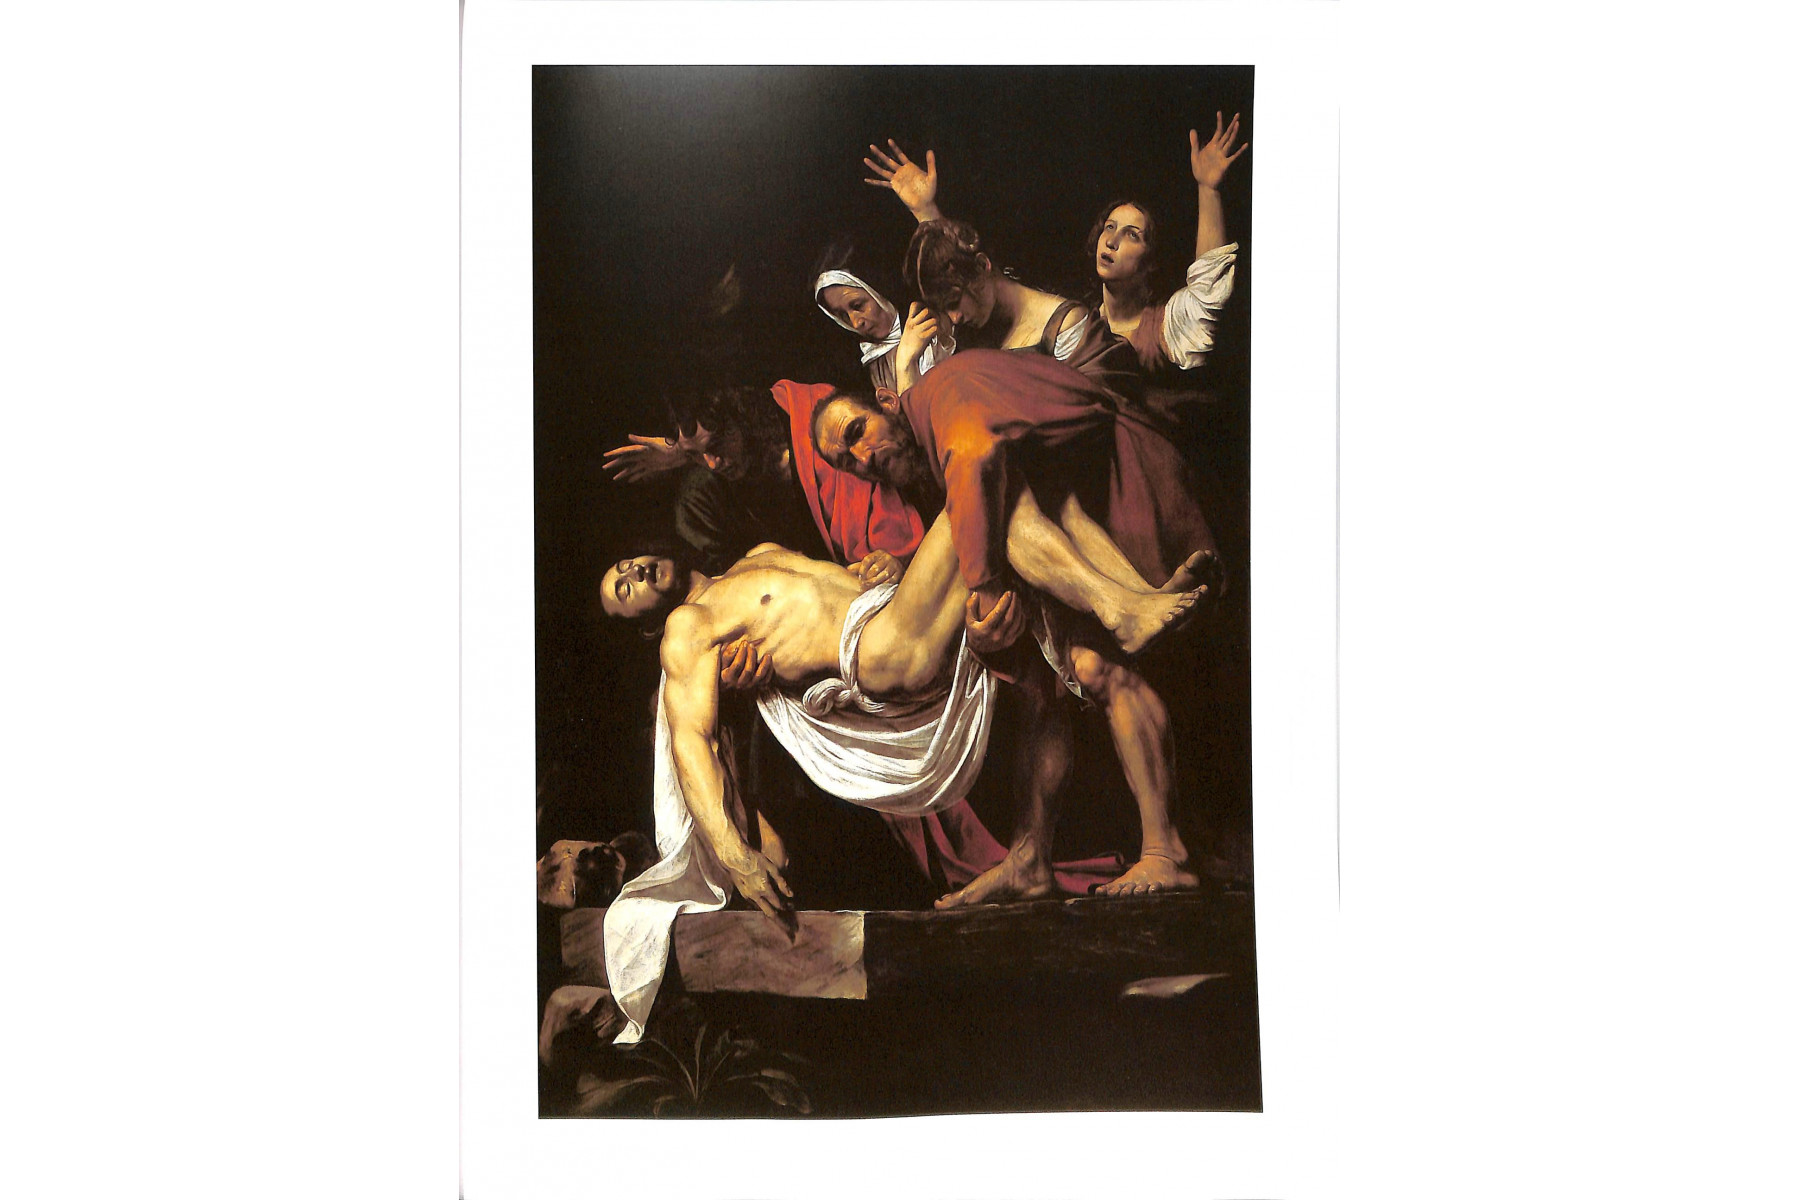 Caravaggio - Phaidon Colour Library